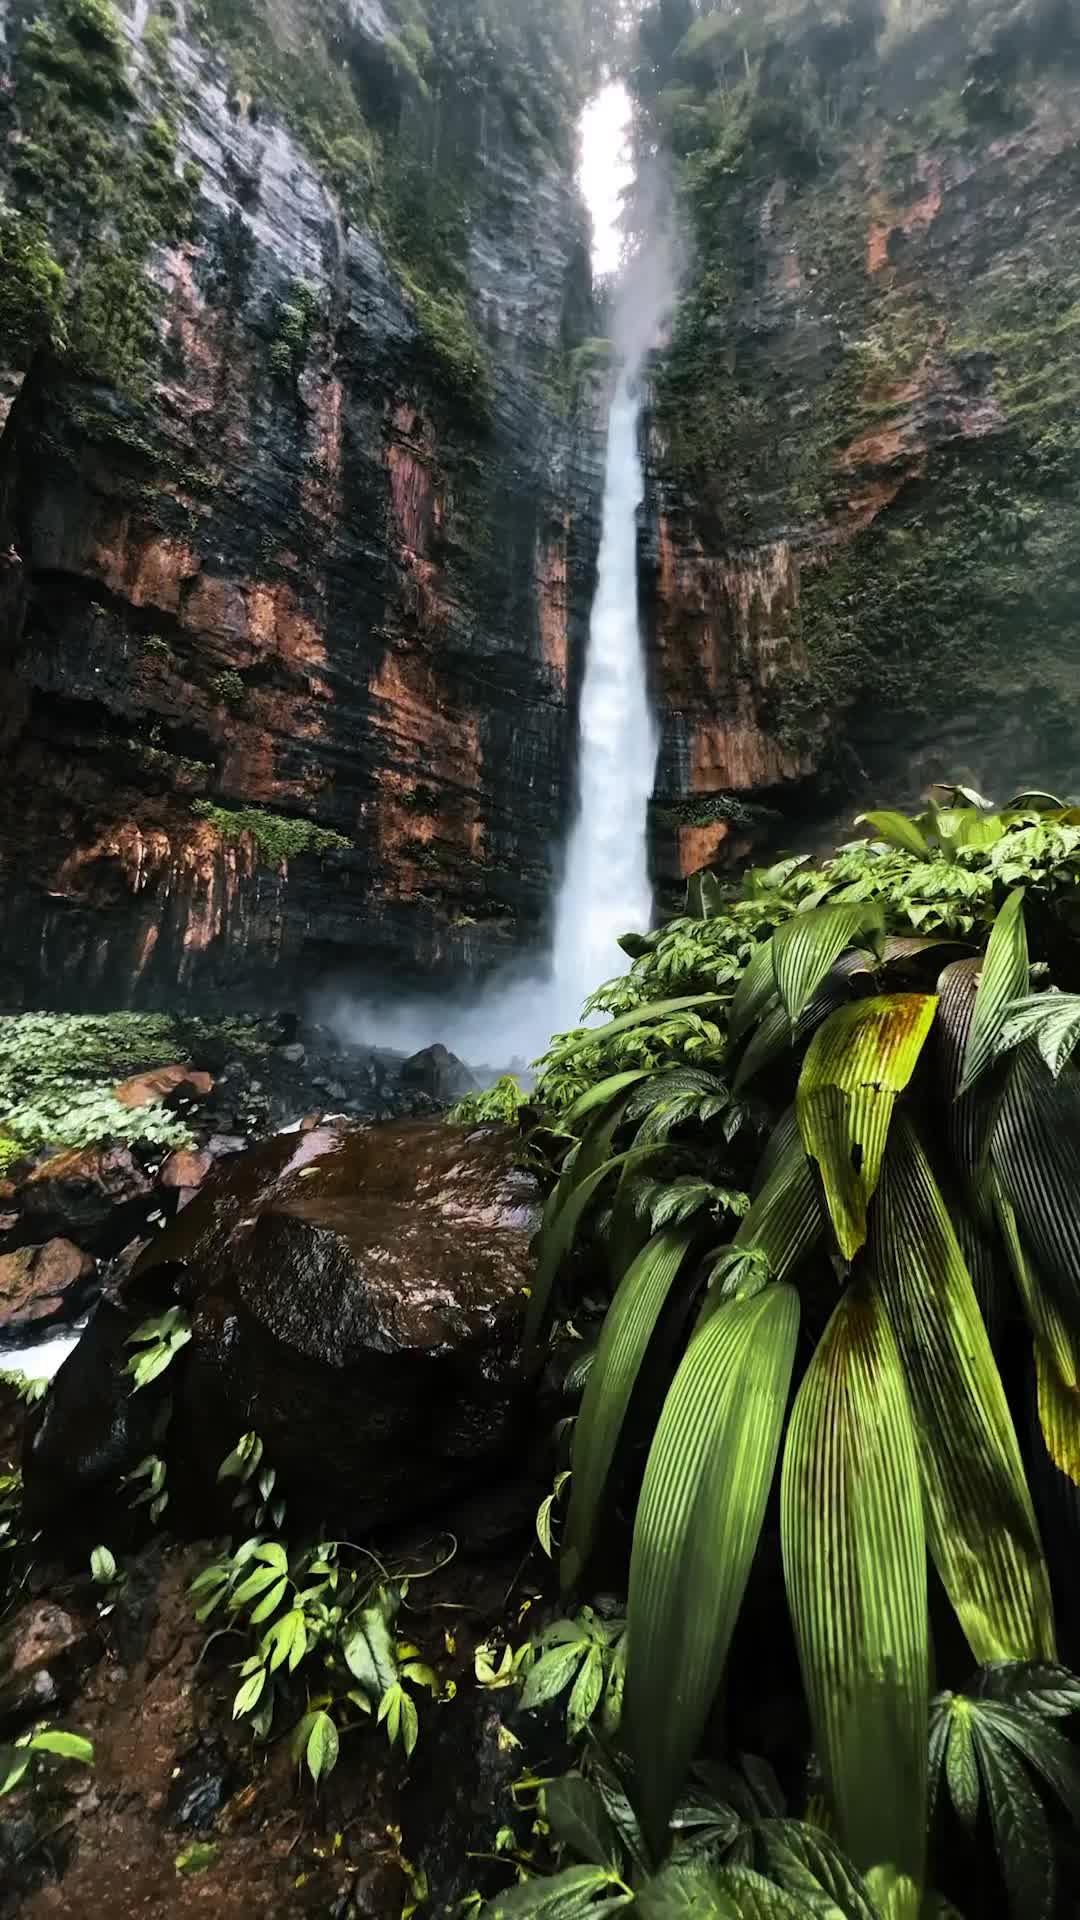 Pure Bliss at Kapas Biru Waterfall, East Java